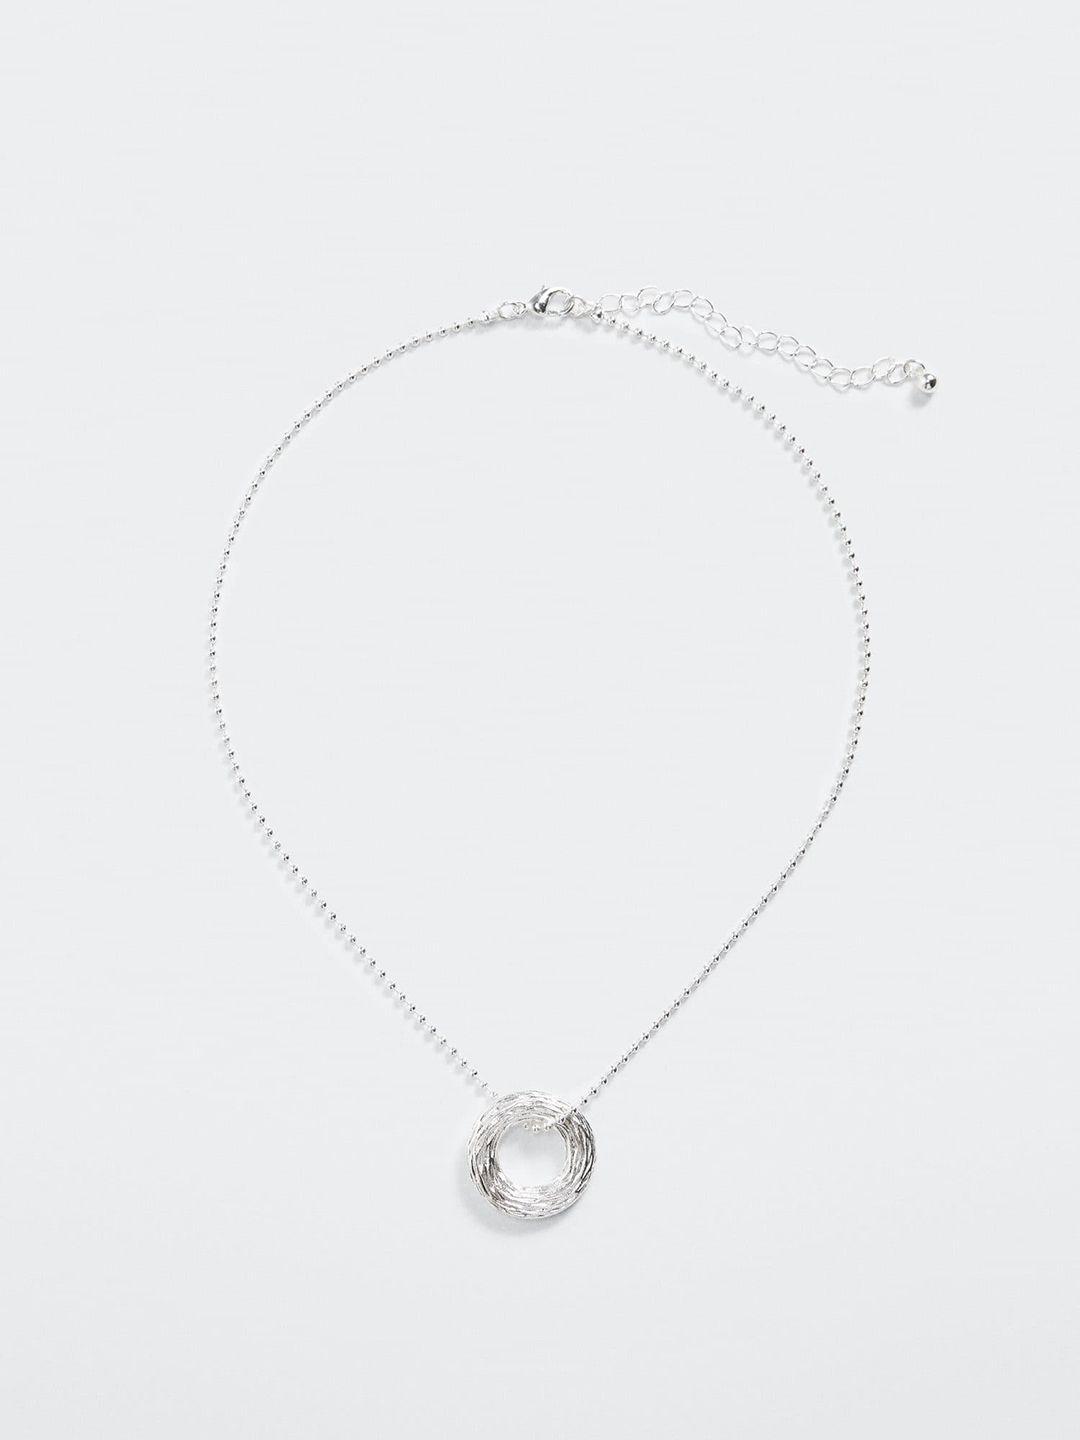 mango beaded necklace with circular textured pendant